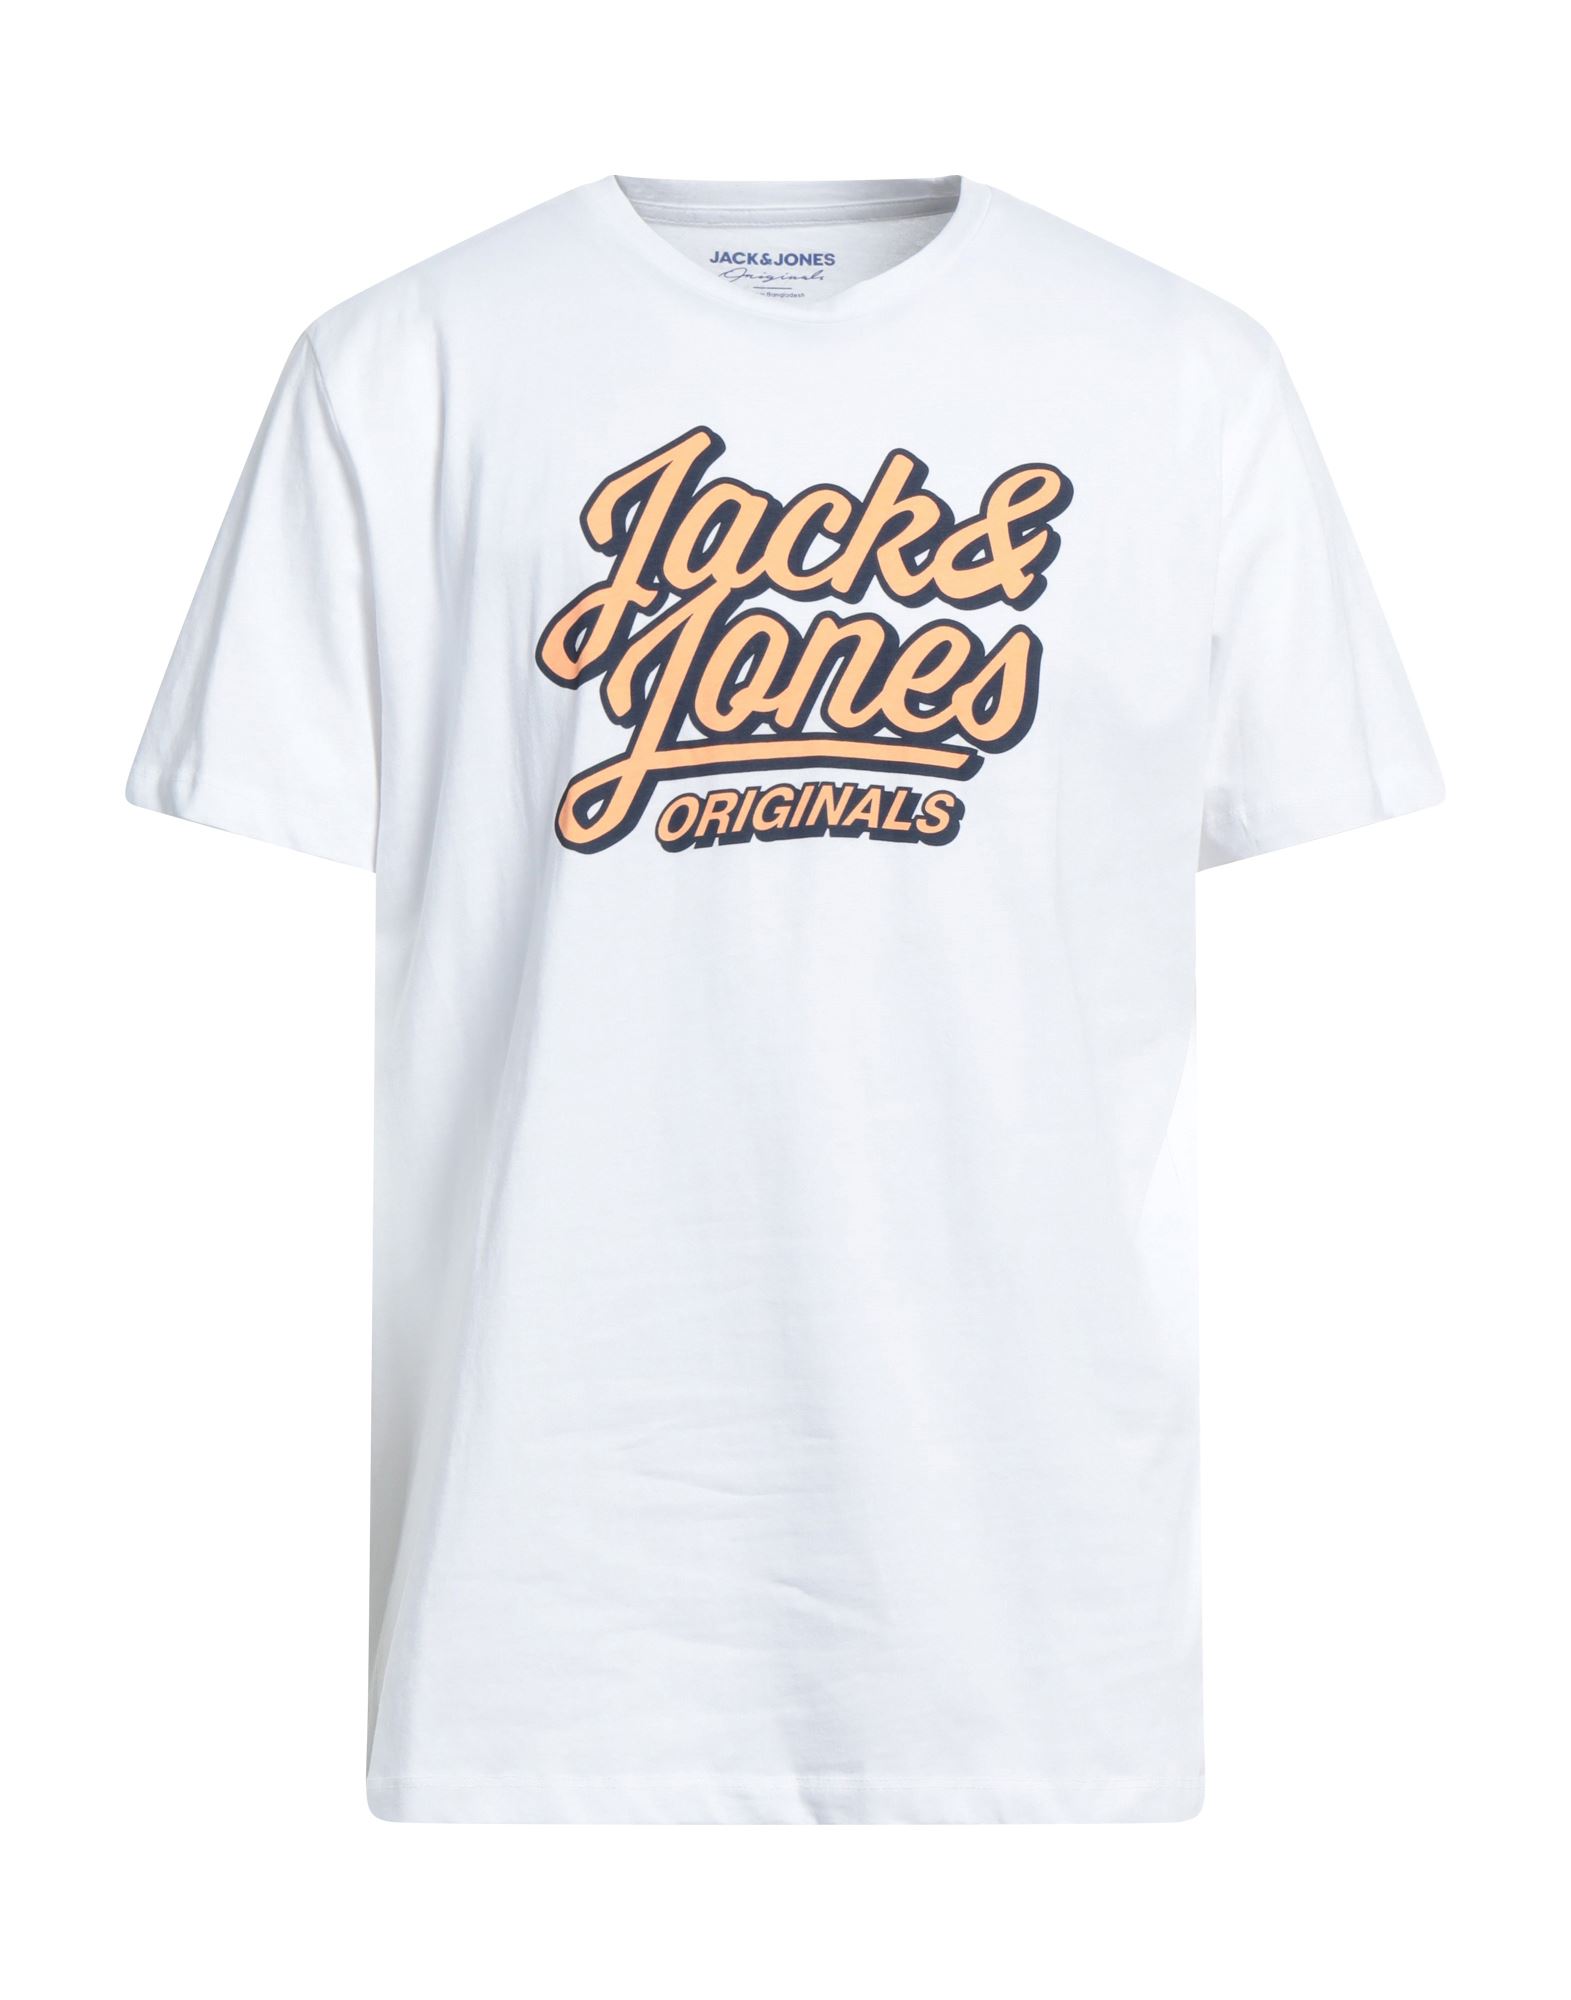 Jack & Jones Man T-shirt White Size M Cotton